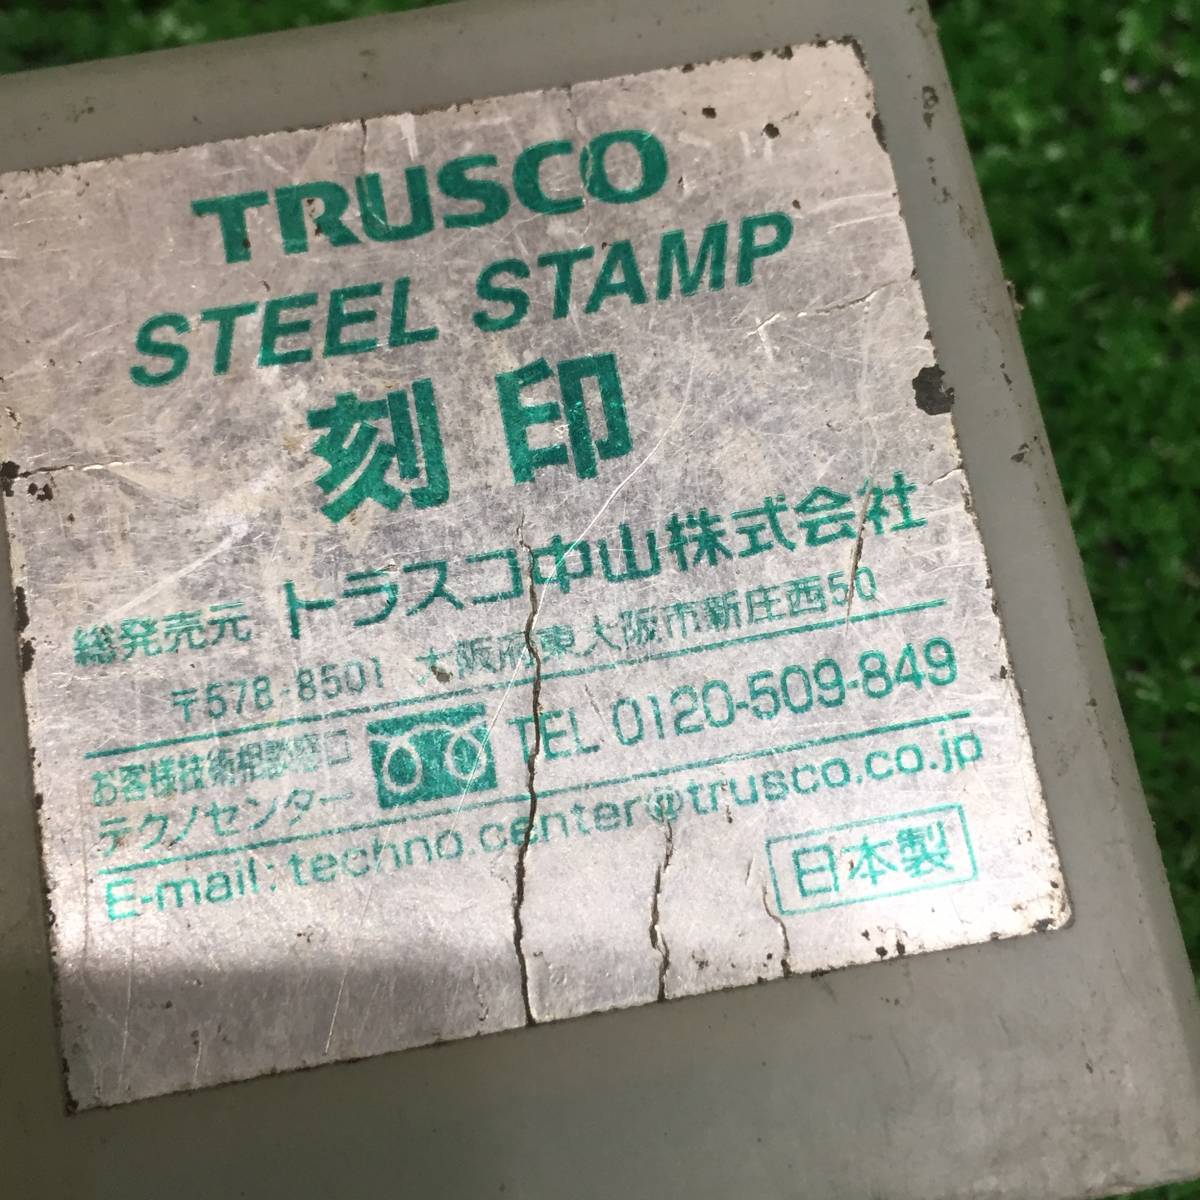 TRUSCO トラスコ中山 ホルダー式精密刻印 3 mm STEEL STAMP Yahoo